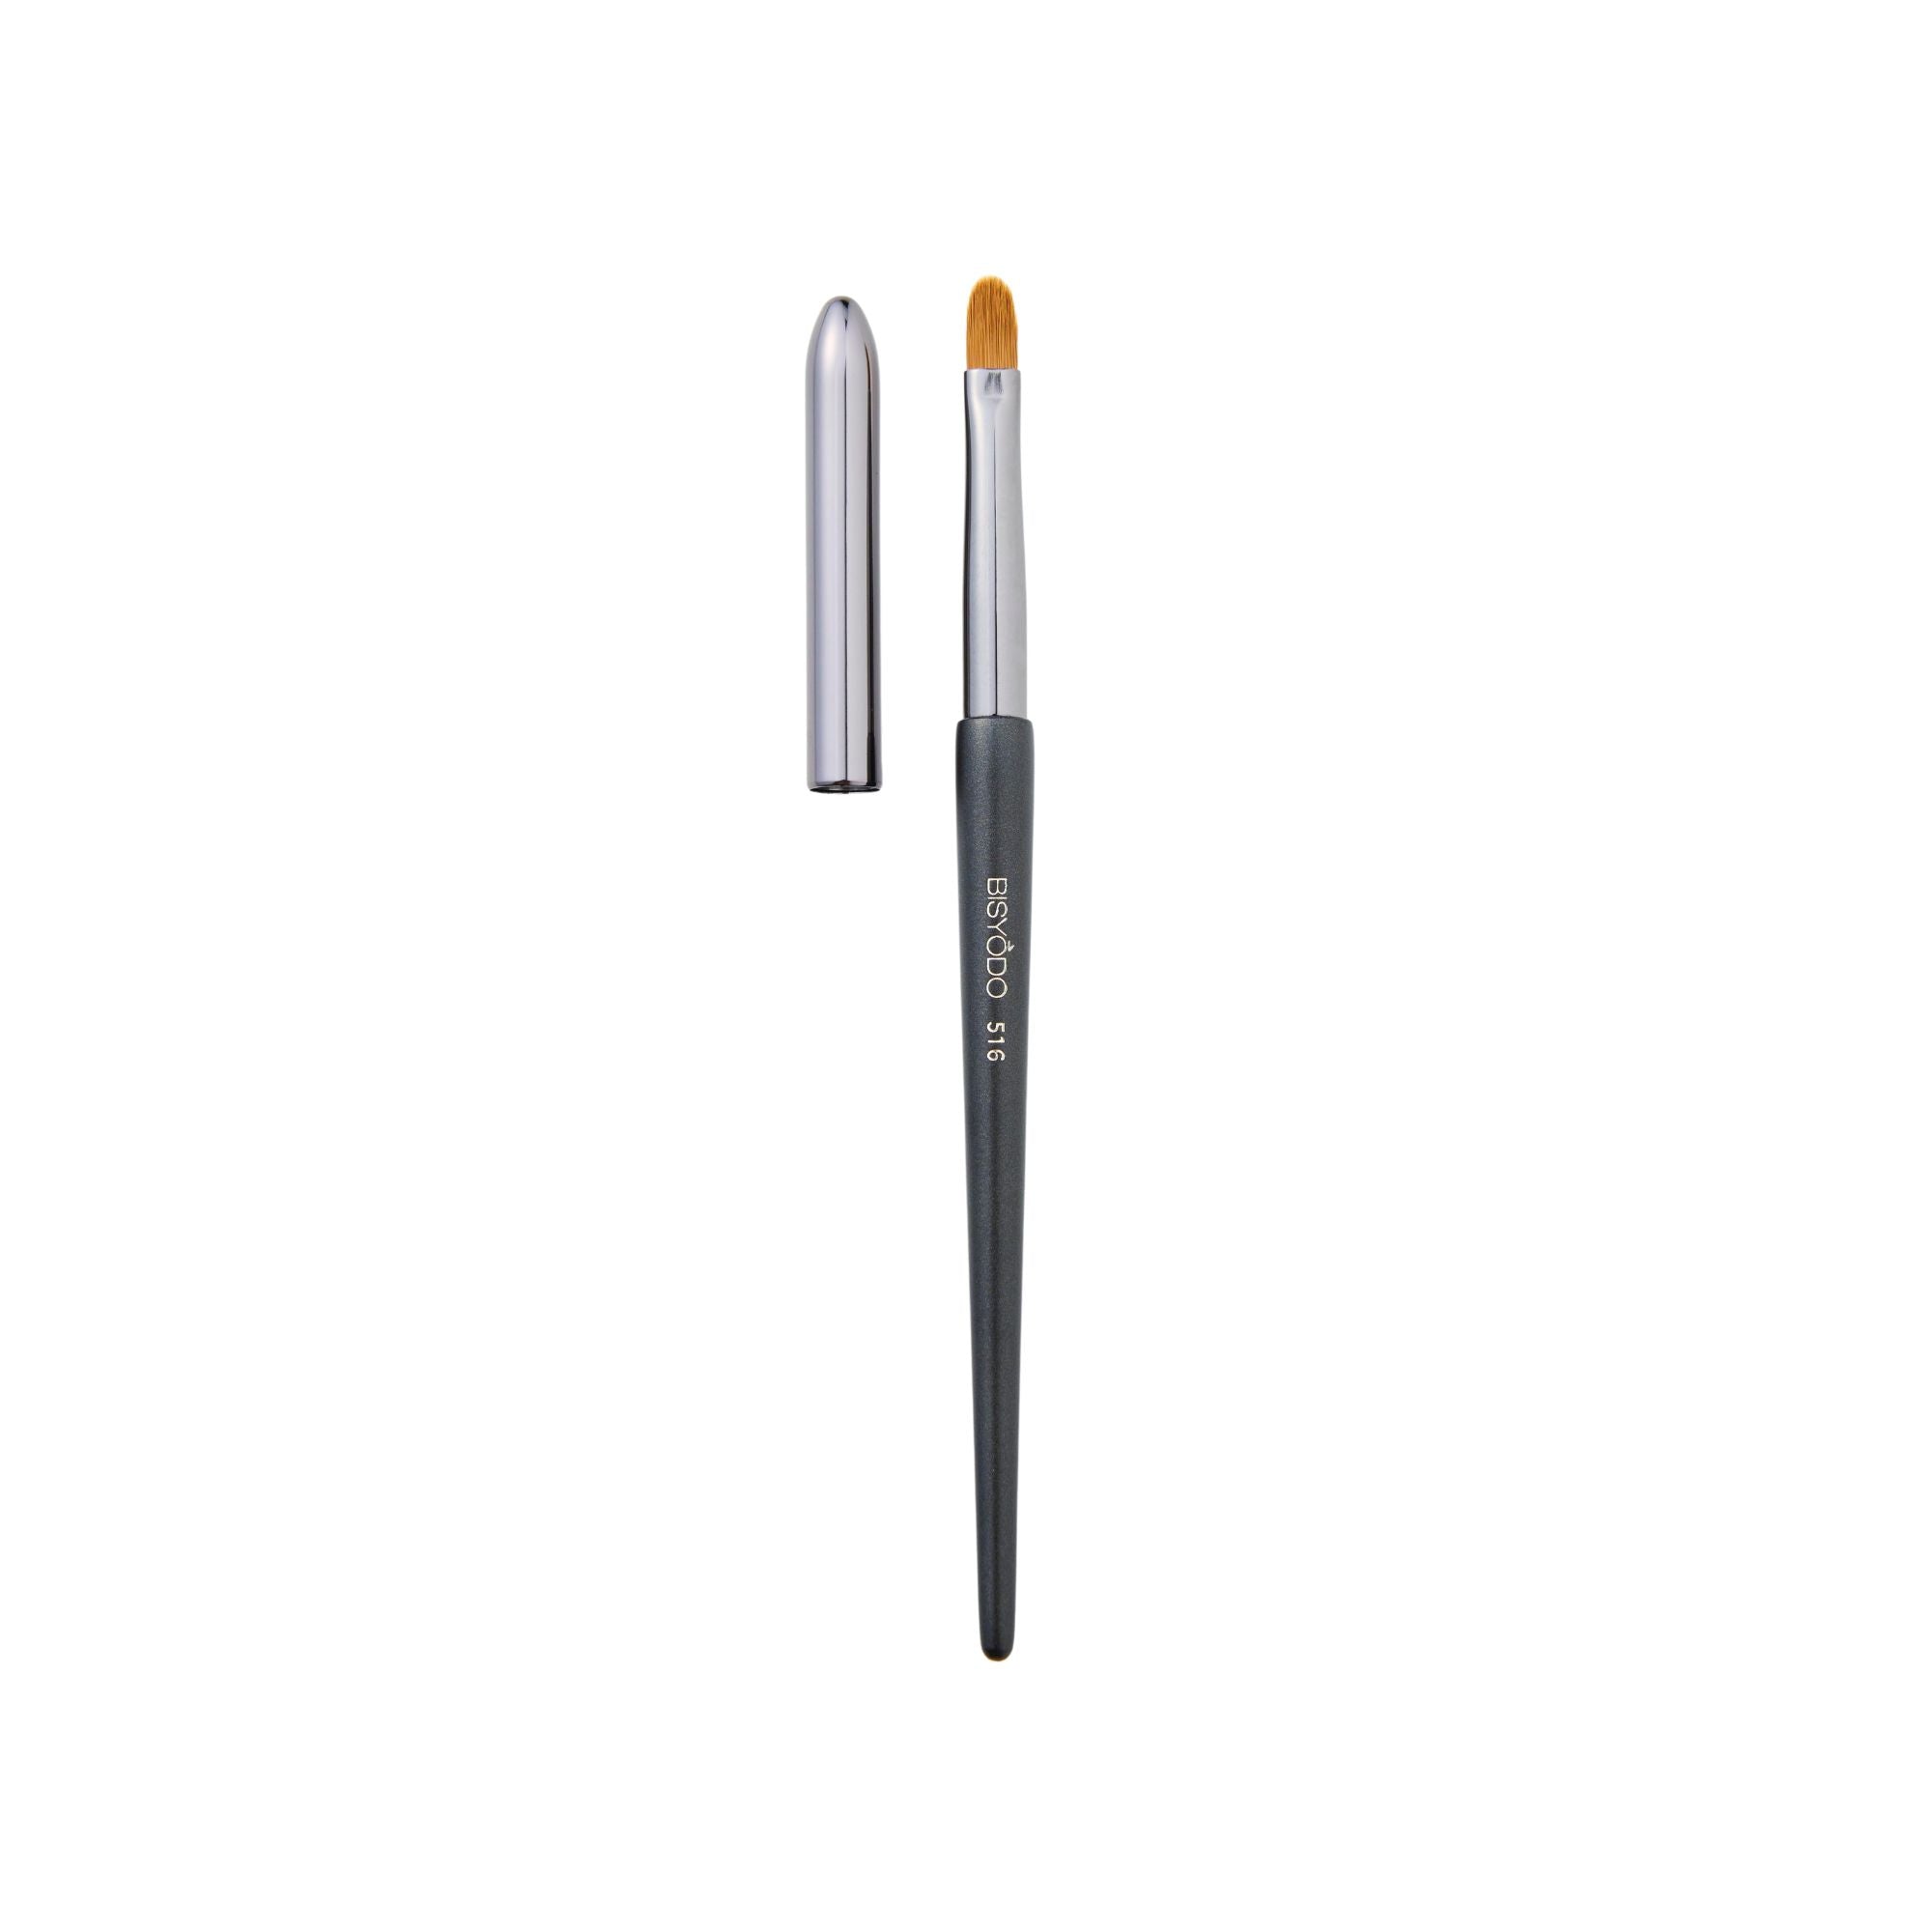 Bisyodo S-516 Concealer Brush, Shiori Series - Fude Beauty, Japanese Makeup Brushes